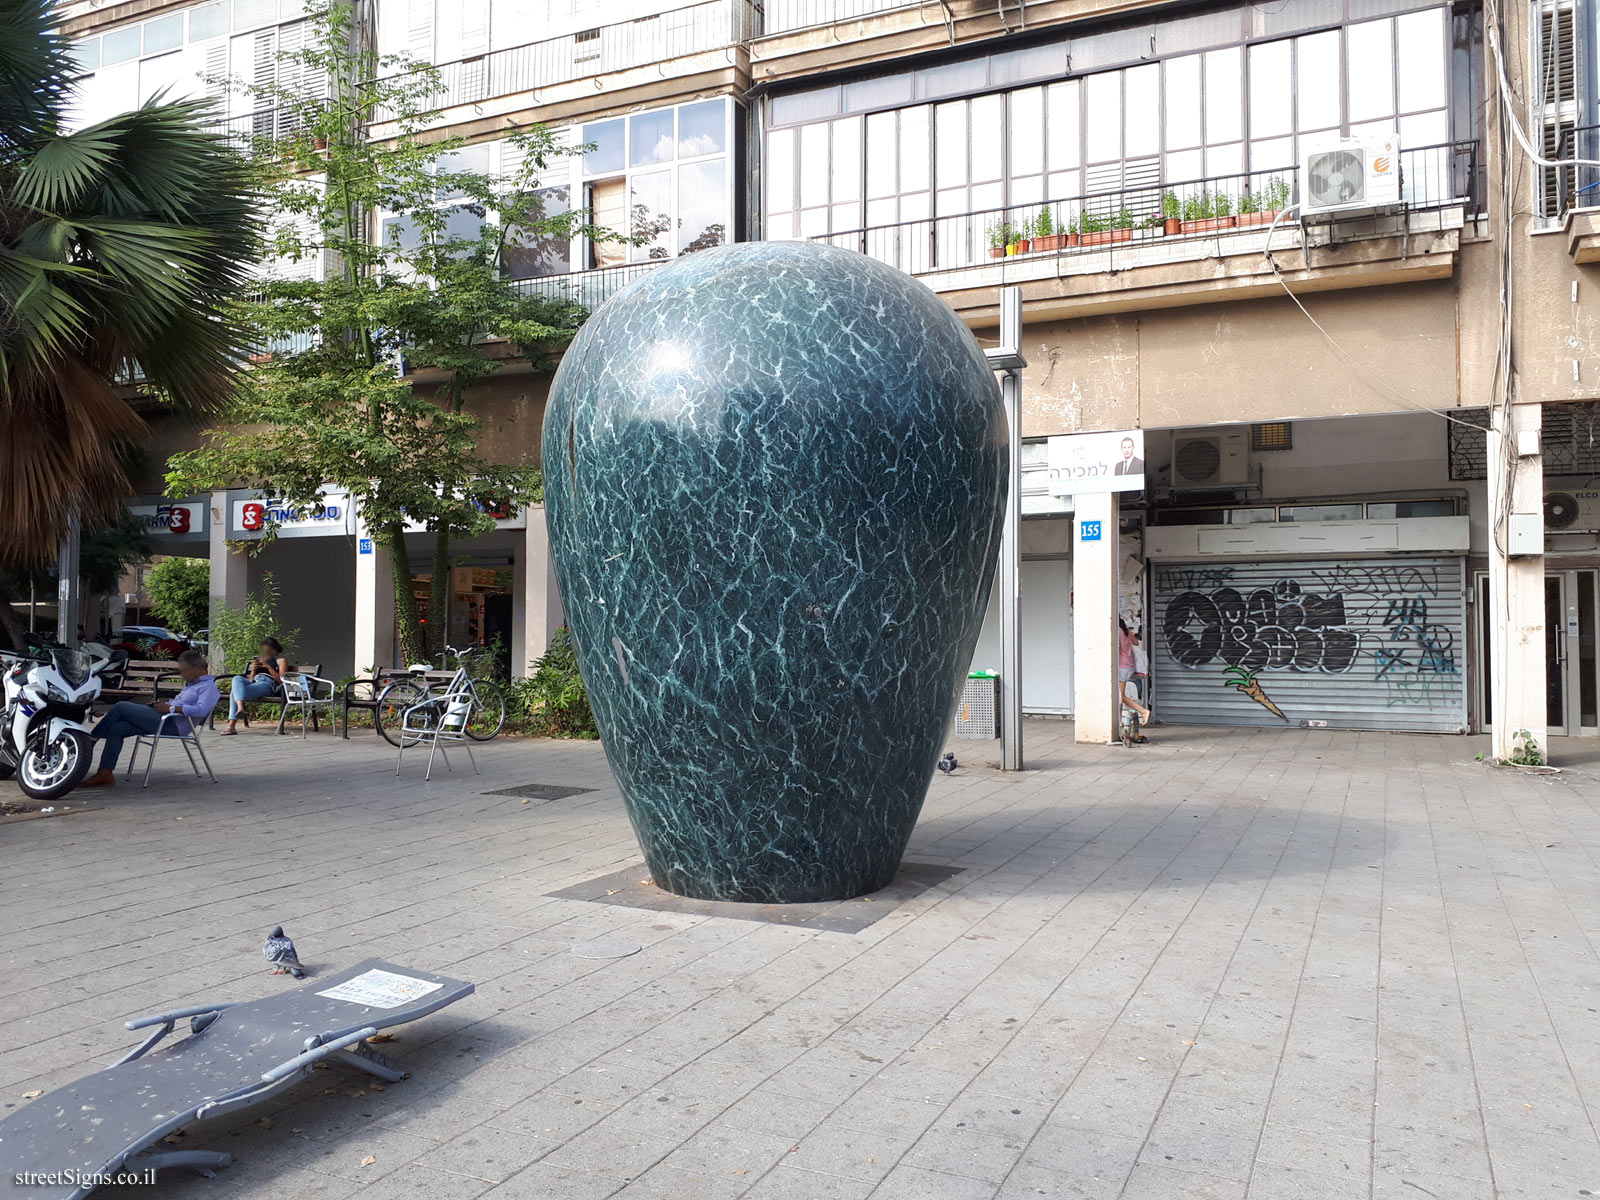 "Vase" - Outdoor sculpture by Gideon Gechtman - Shlomo Ibn Gabirol St 153, Tel Aviv-Yafo, Israel